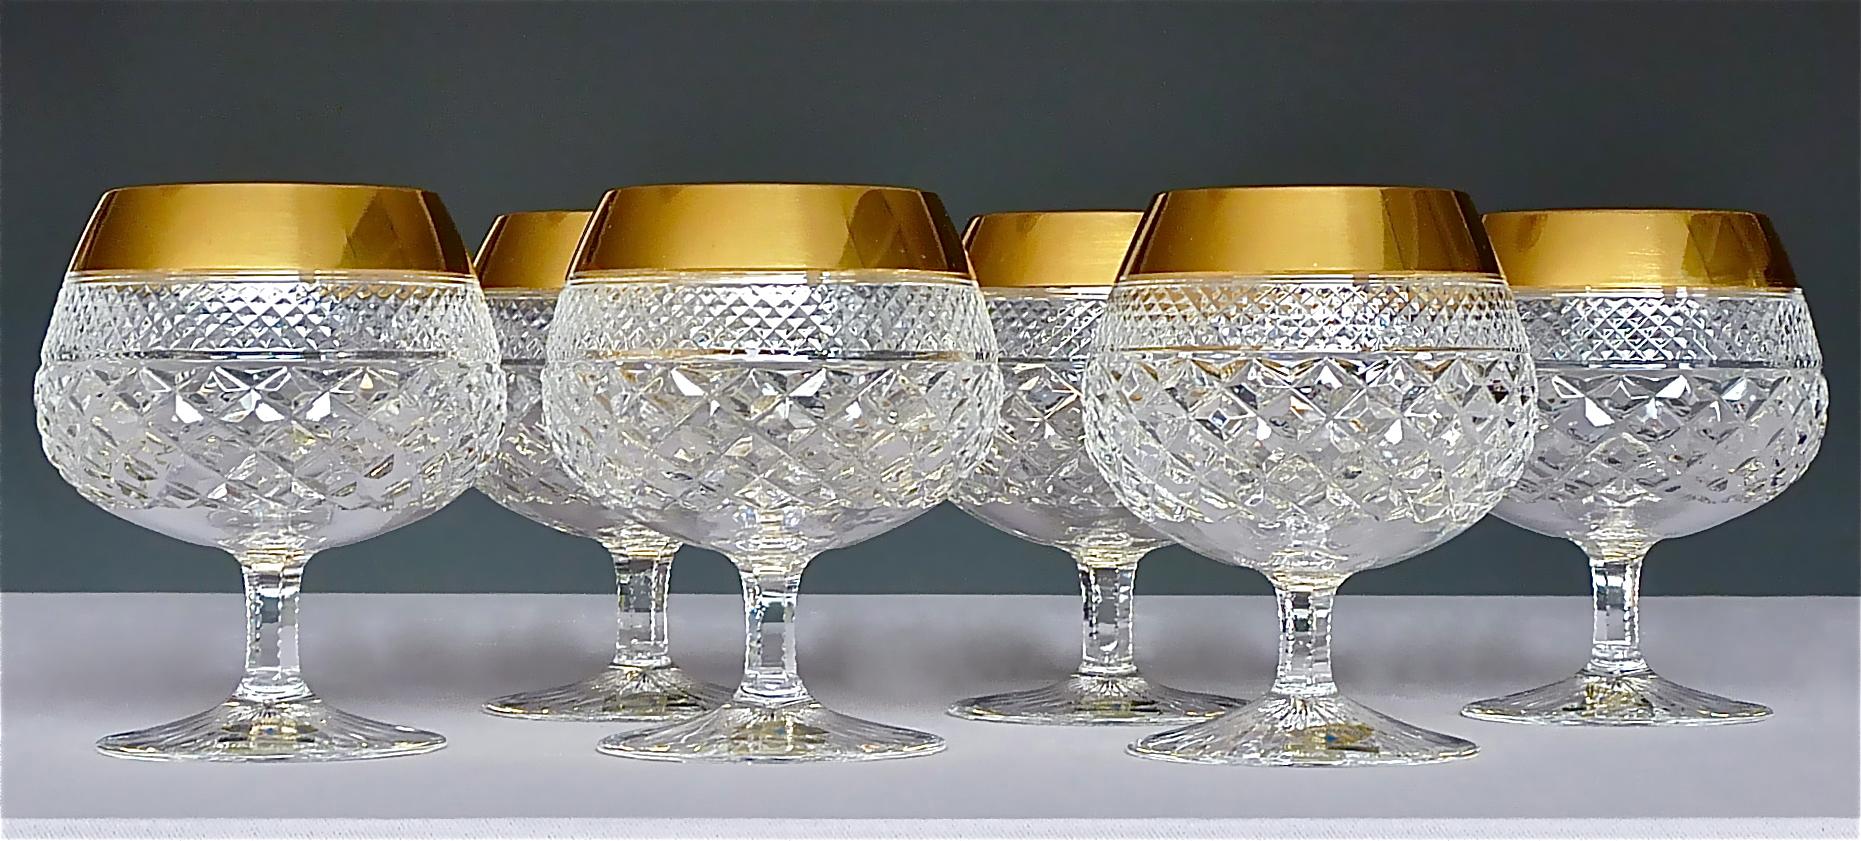 Faceted Precious 6 Cognac Glasses Gold Crystal Glass Stemware Josephinenhuette Moser